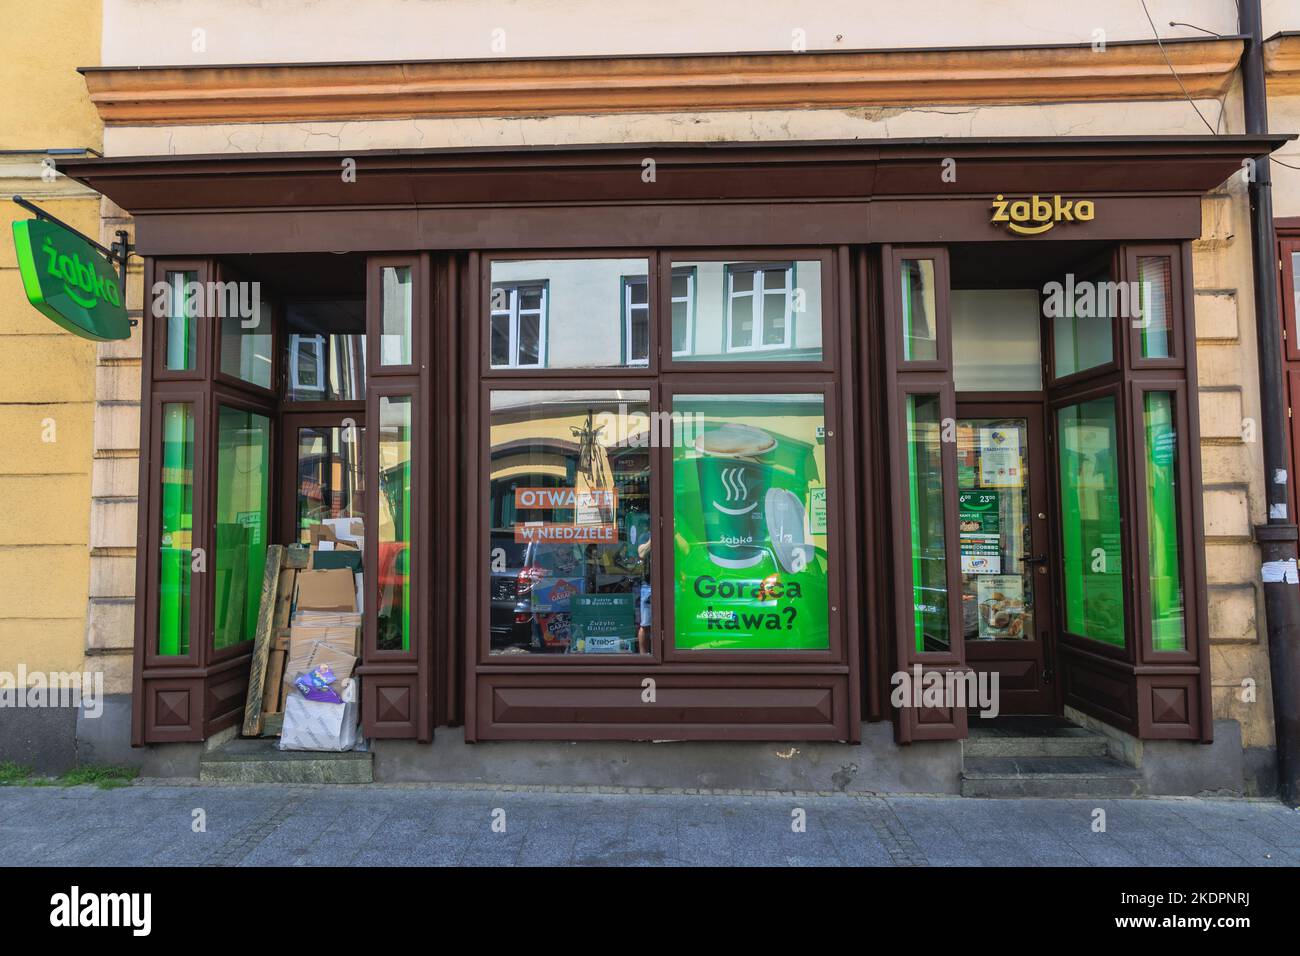 Zabka convenience store in Old Town of Cieszyn border city in Poland Stock Photo